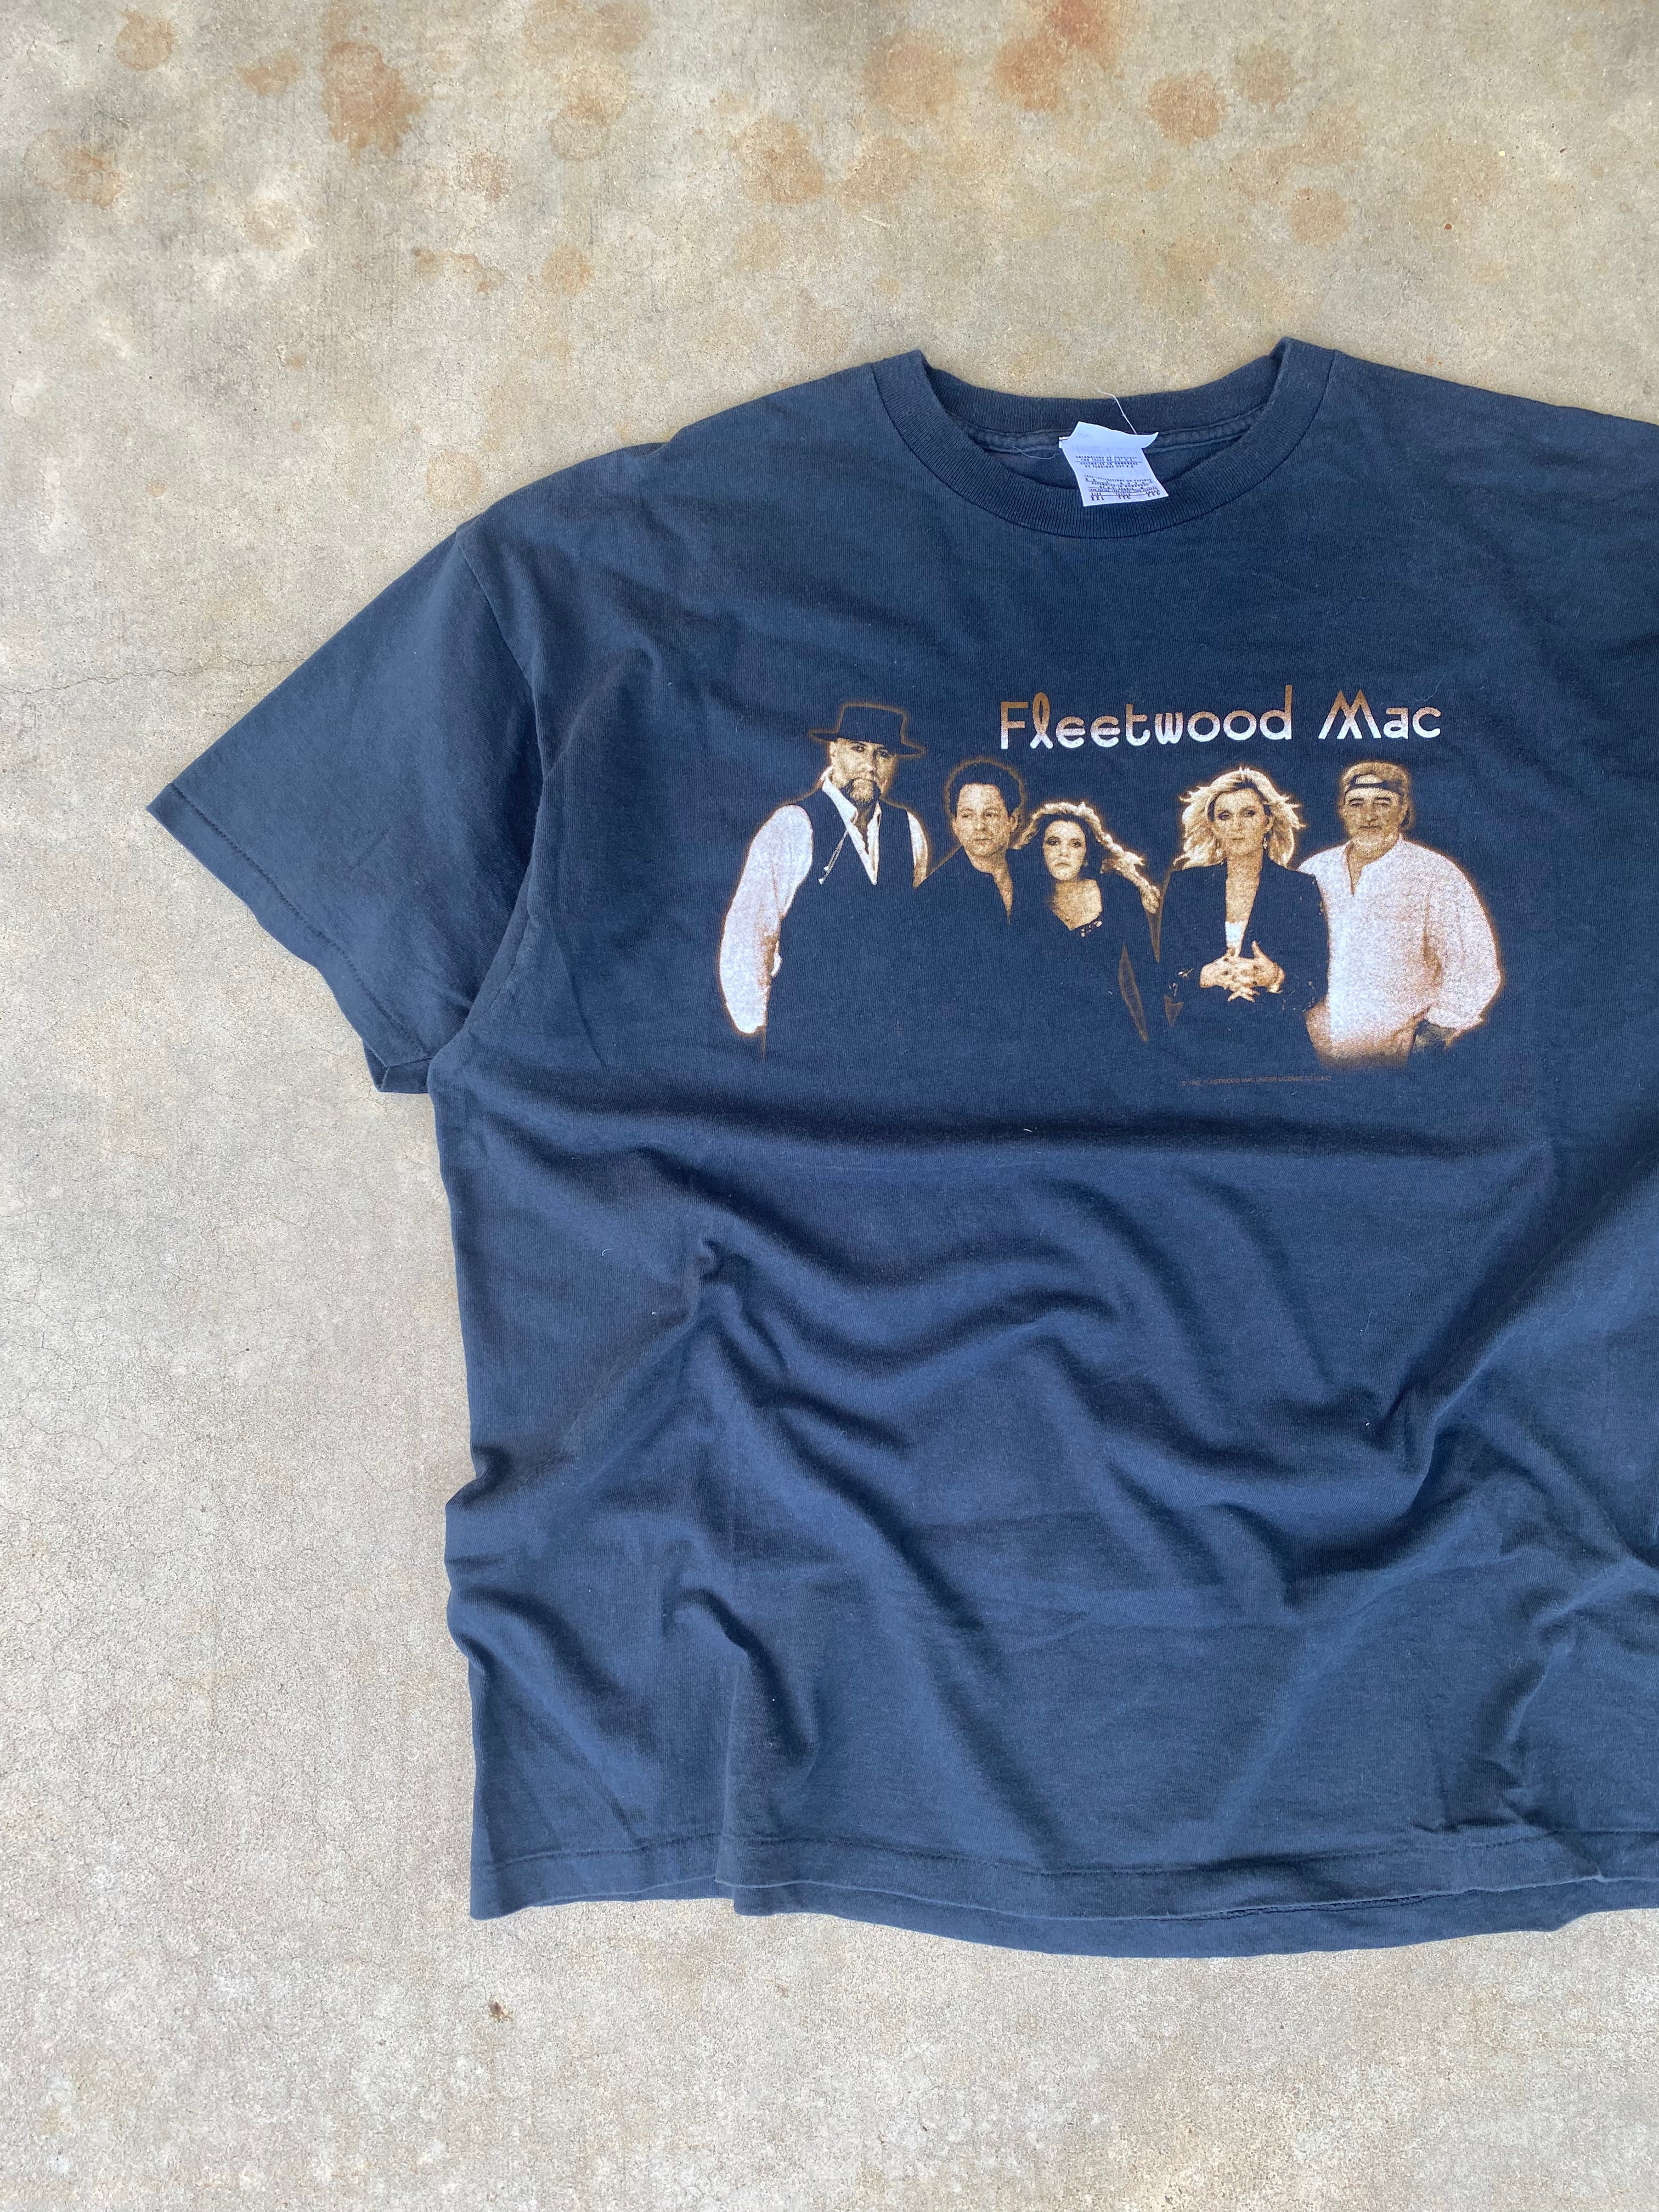 1997 Fleetwood Mac Tour T-Shirt